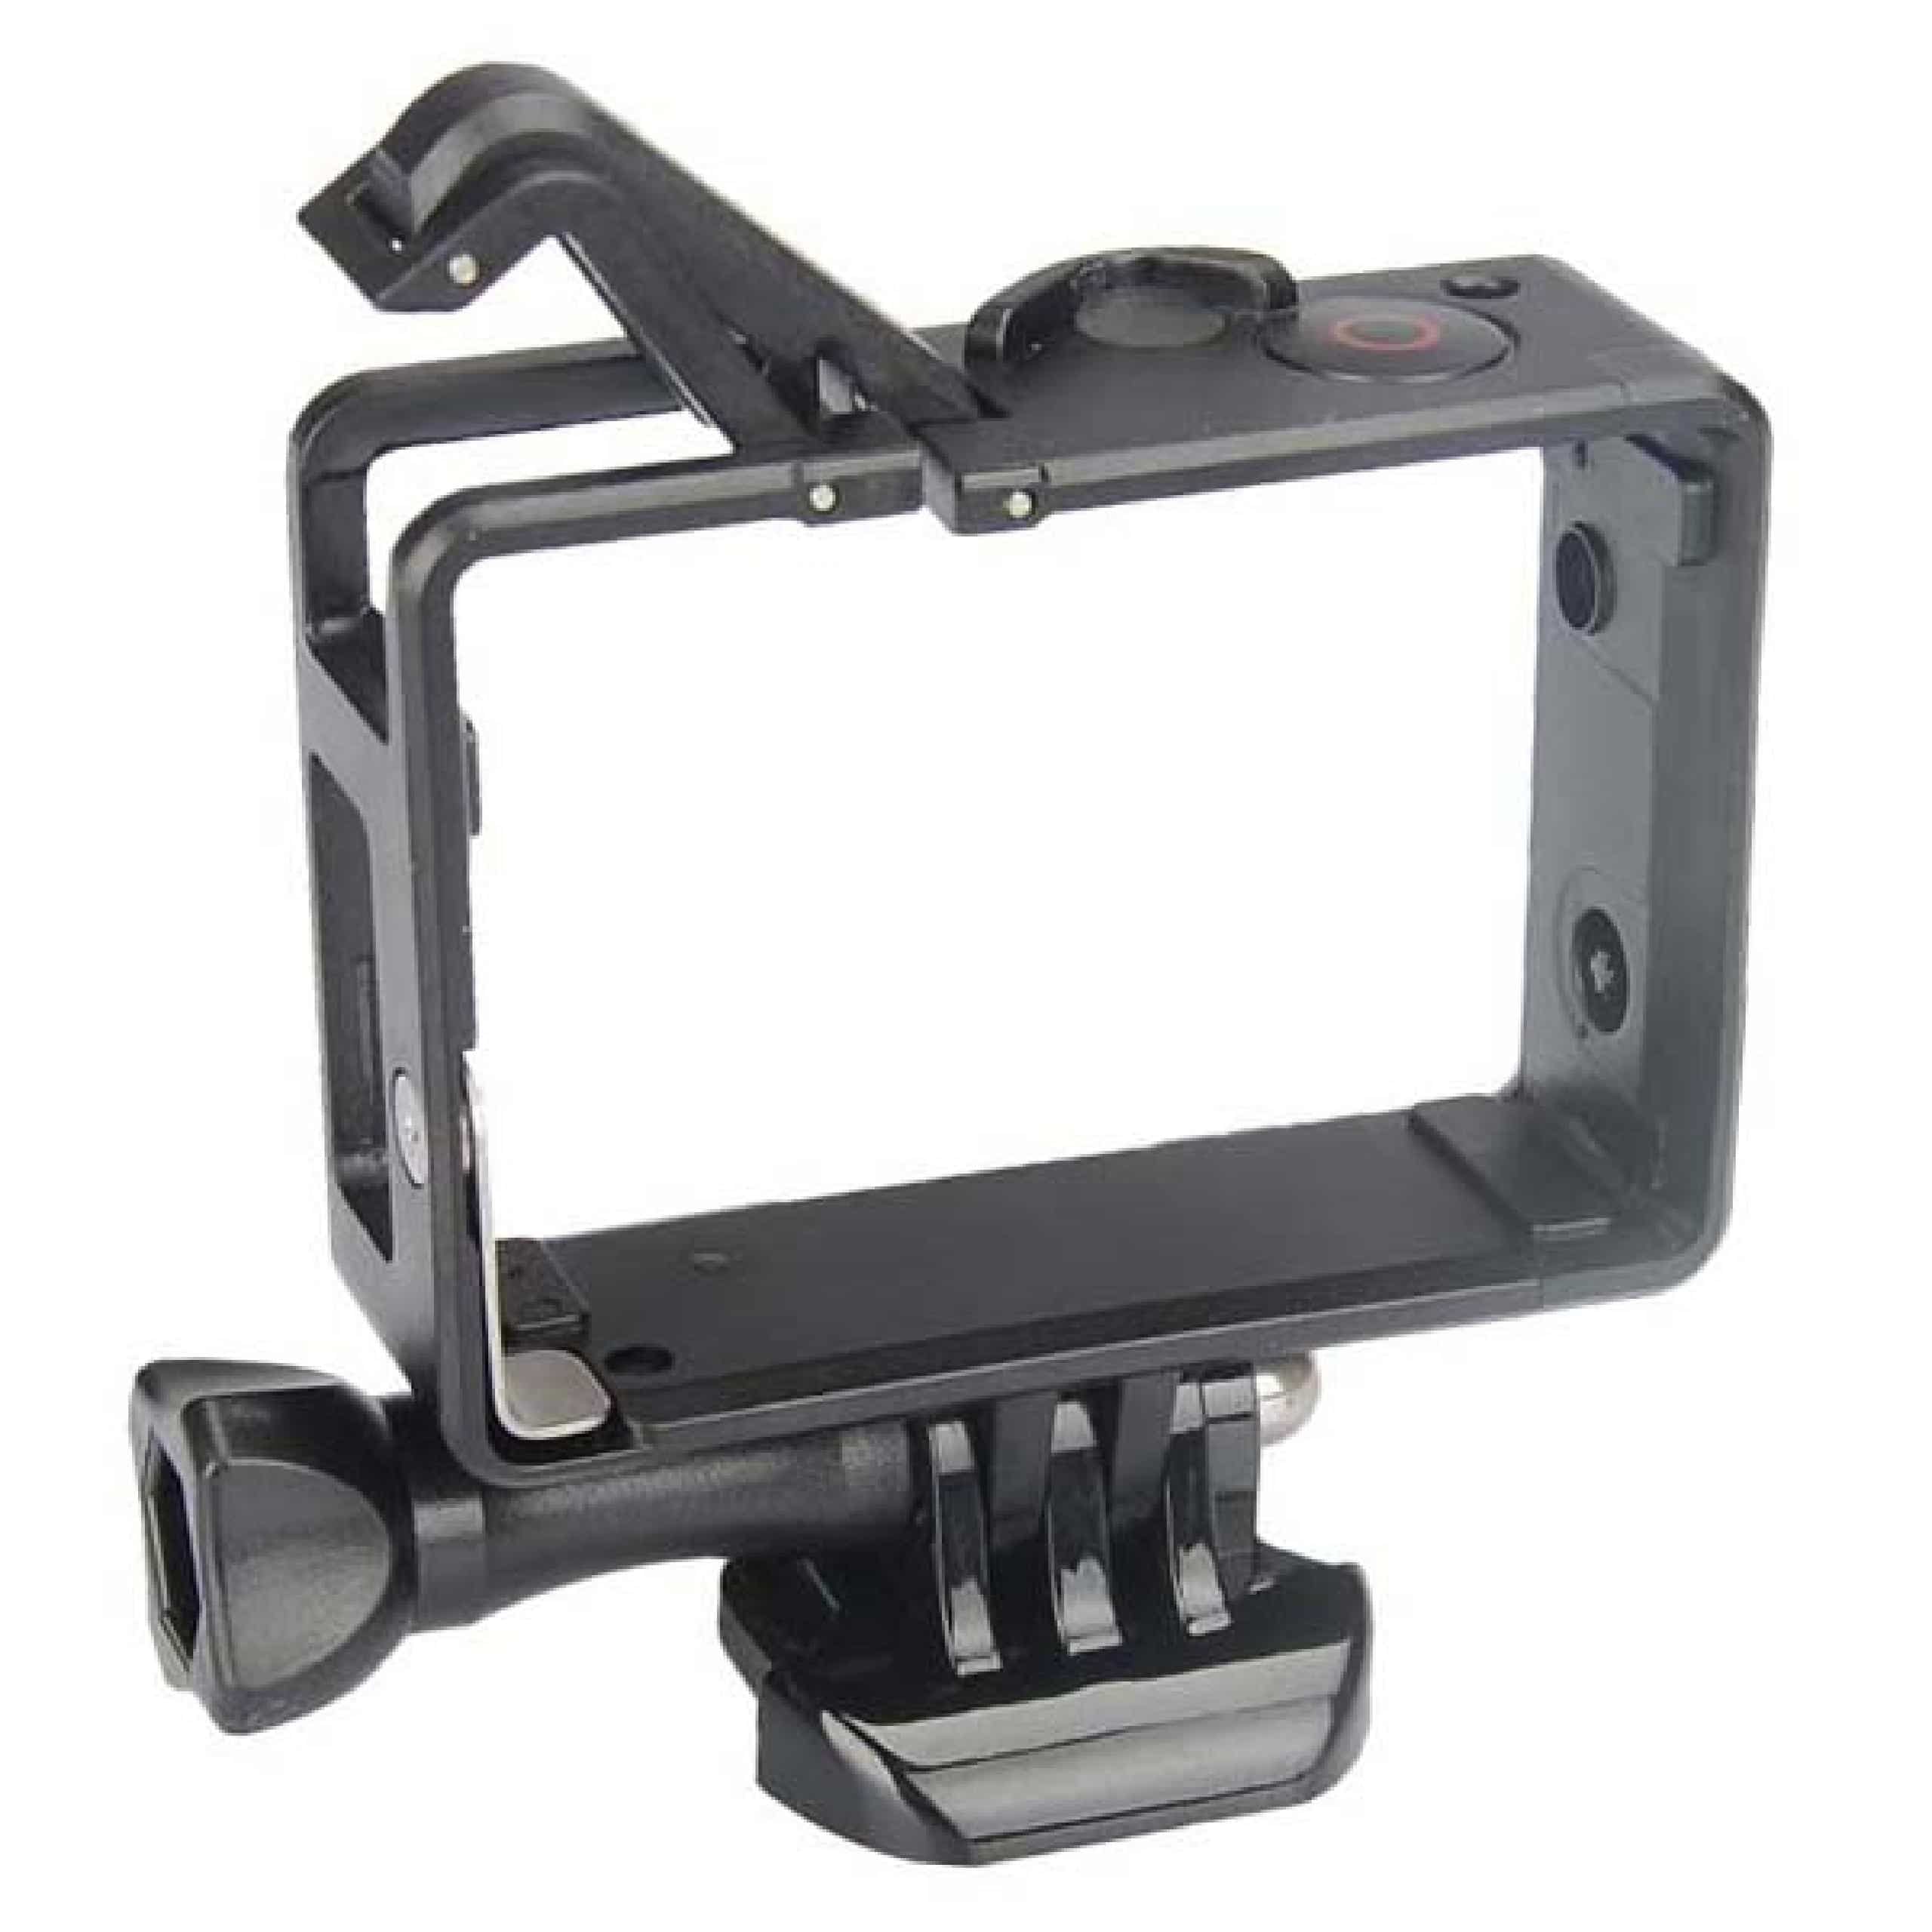 Frame Mount suitable for GoPro Hero 5 Black Action-Cam - Plastic Black